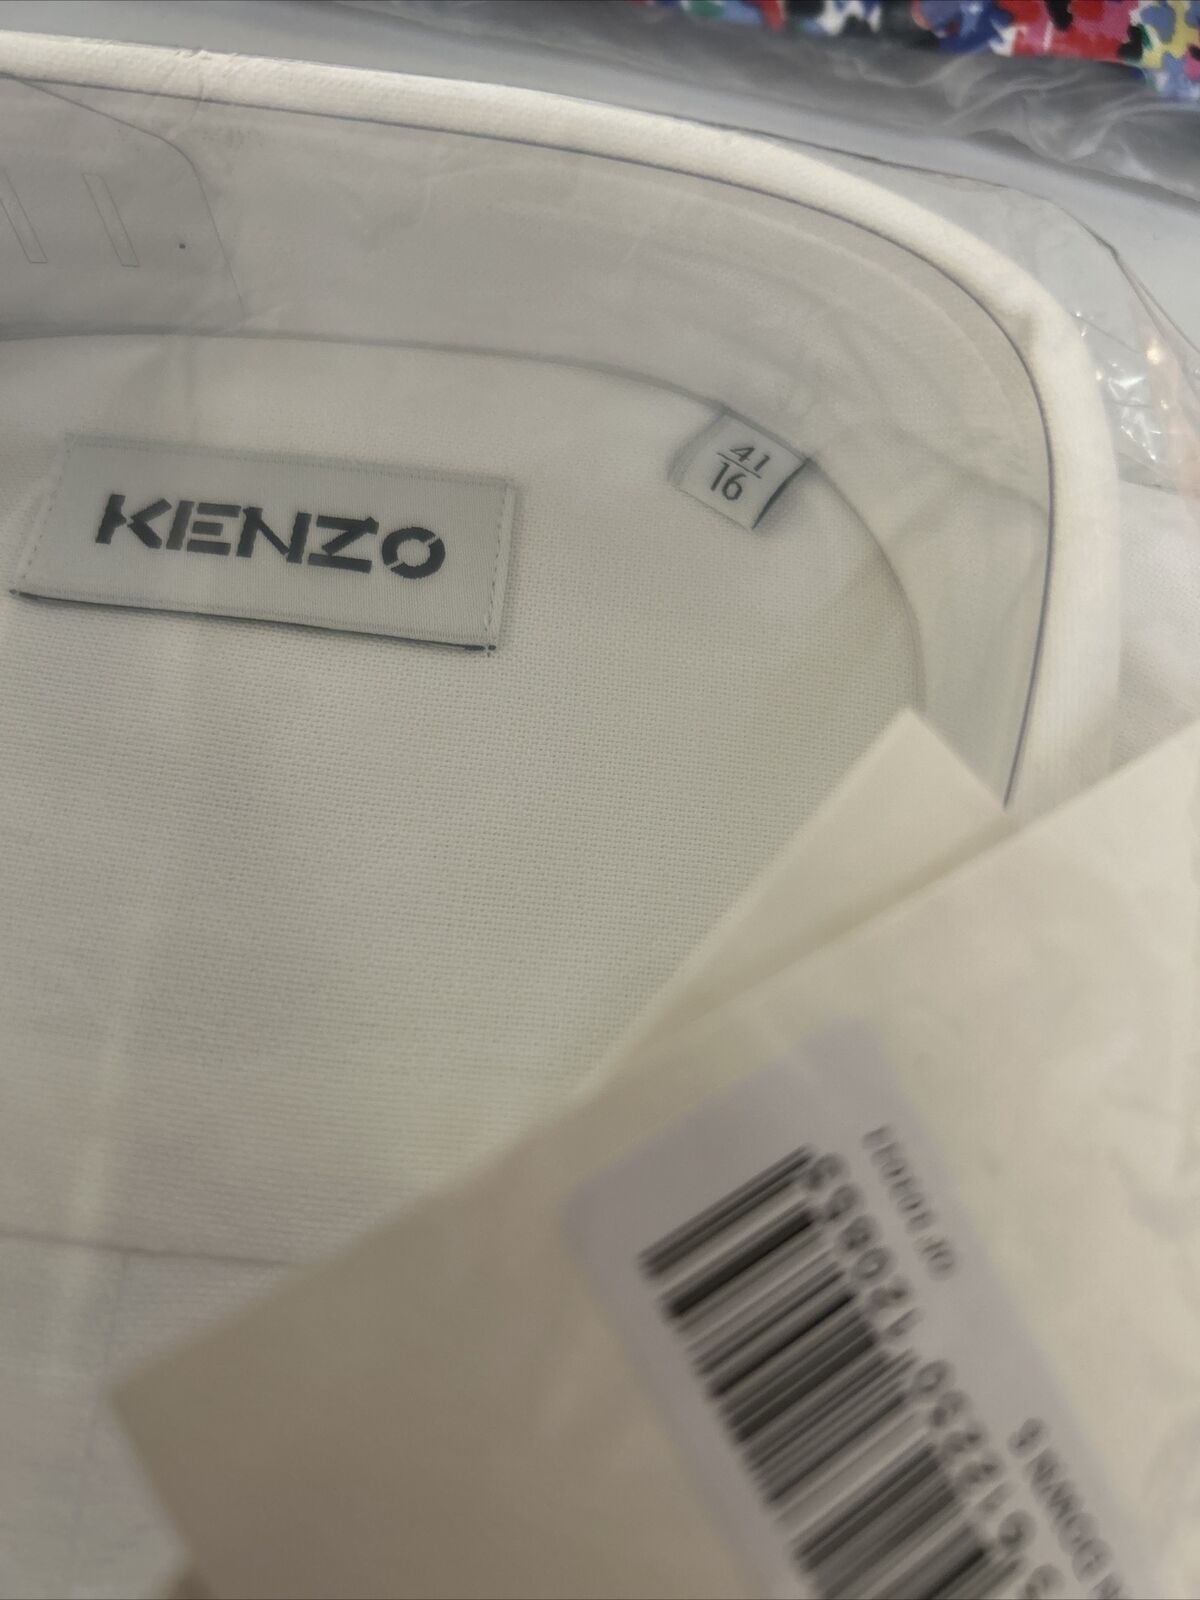 Kenzo Tiger Crest Botton Down Shirt - White. UK 41/16 **** Ref V295